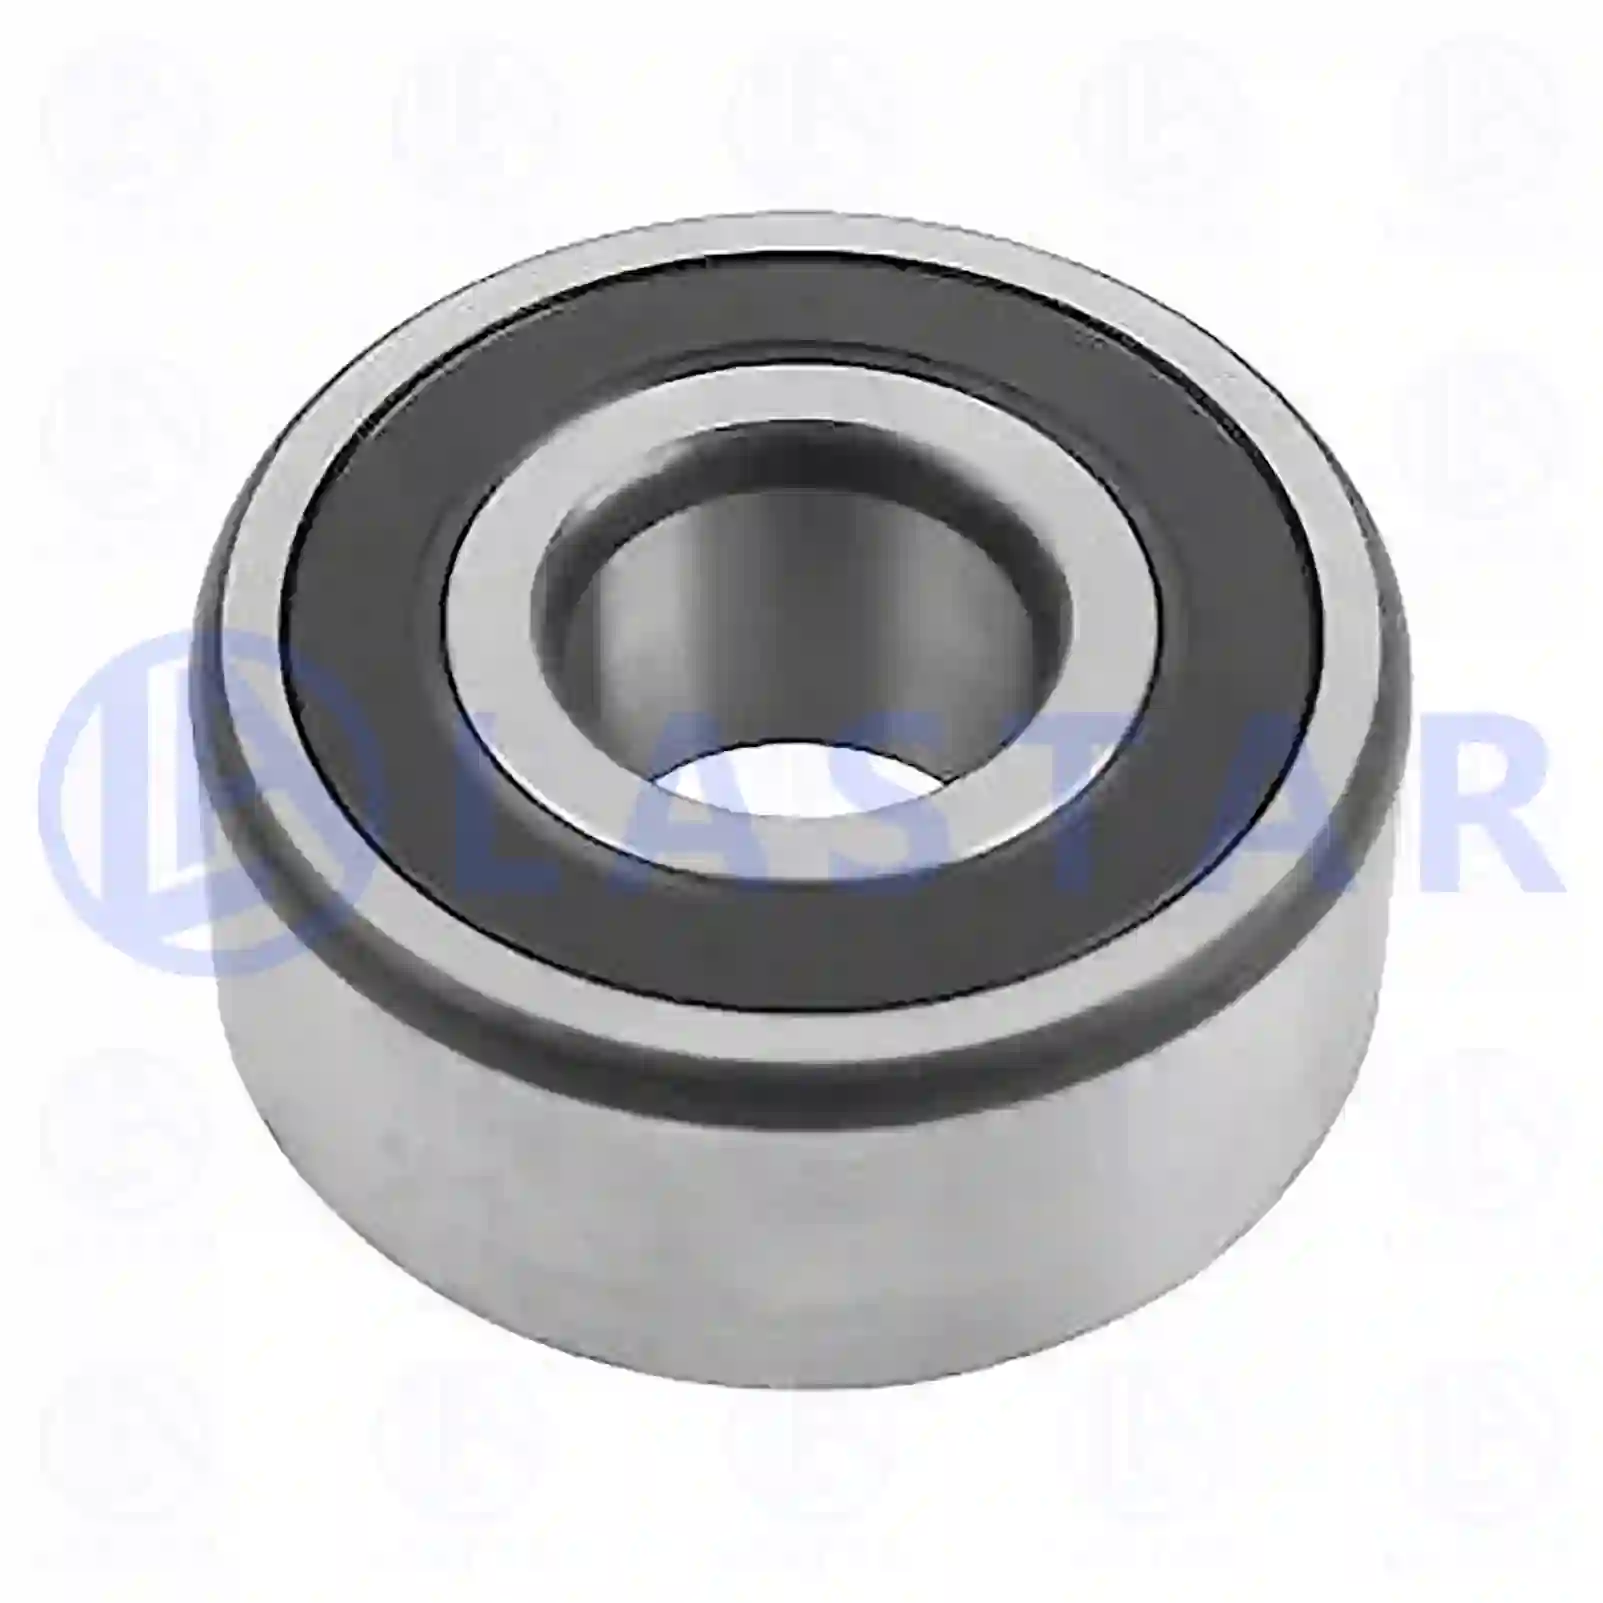 Alternator Ball bearing, la no: 77713207 ,  oem no:3035574, , Lastar Spare Part | Truck Spare Parts, Auotomotive Spare Parts